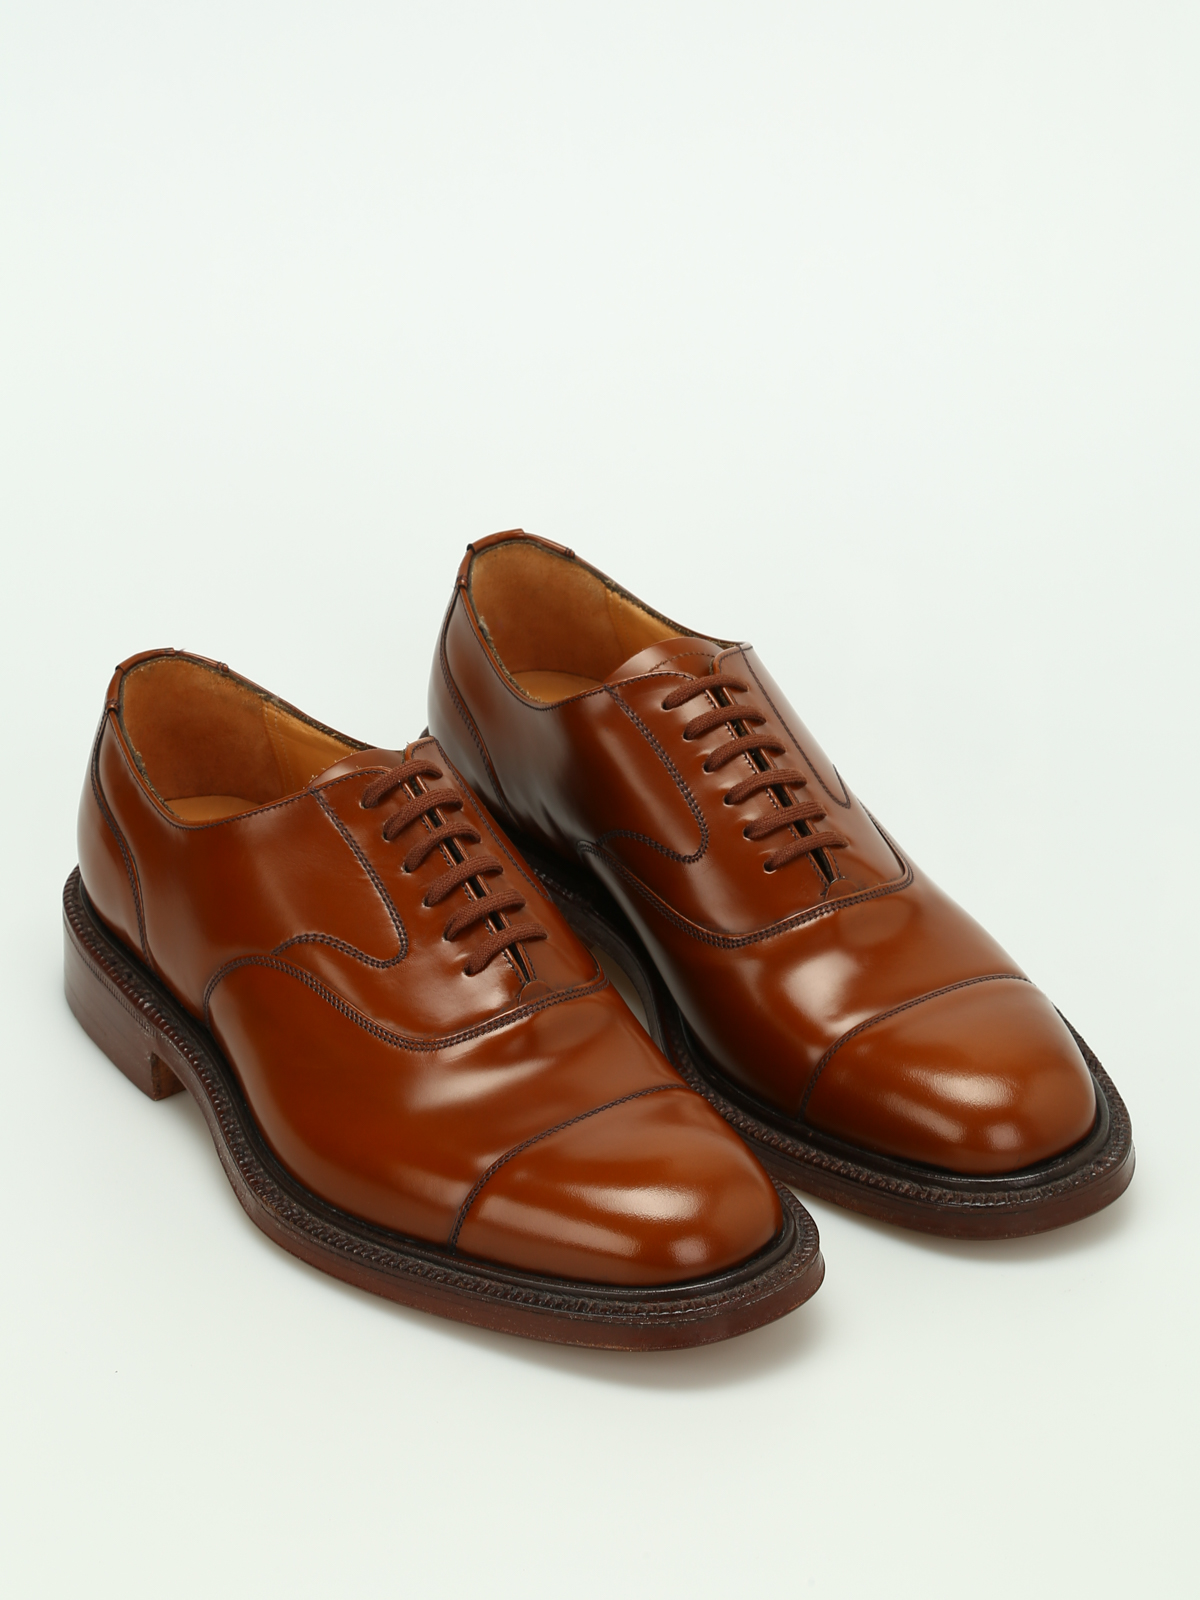 Classic shoes Church's - Lancaster polished binder shoes - LANCASTER734455